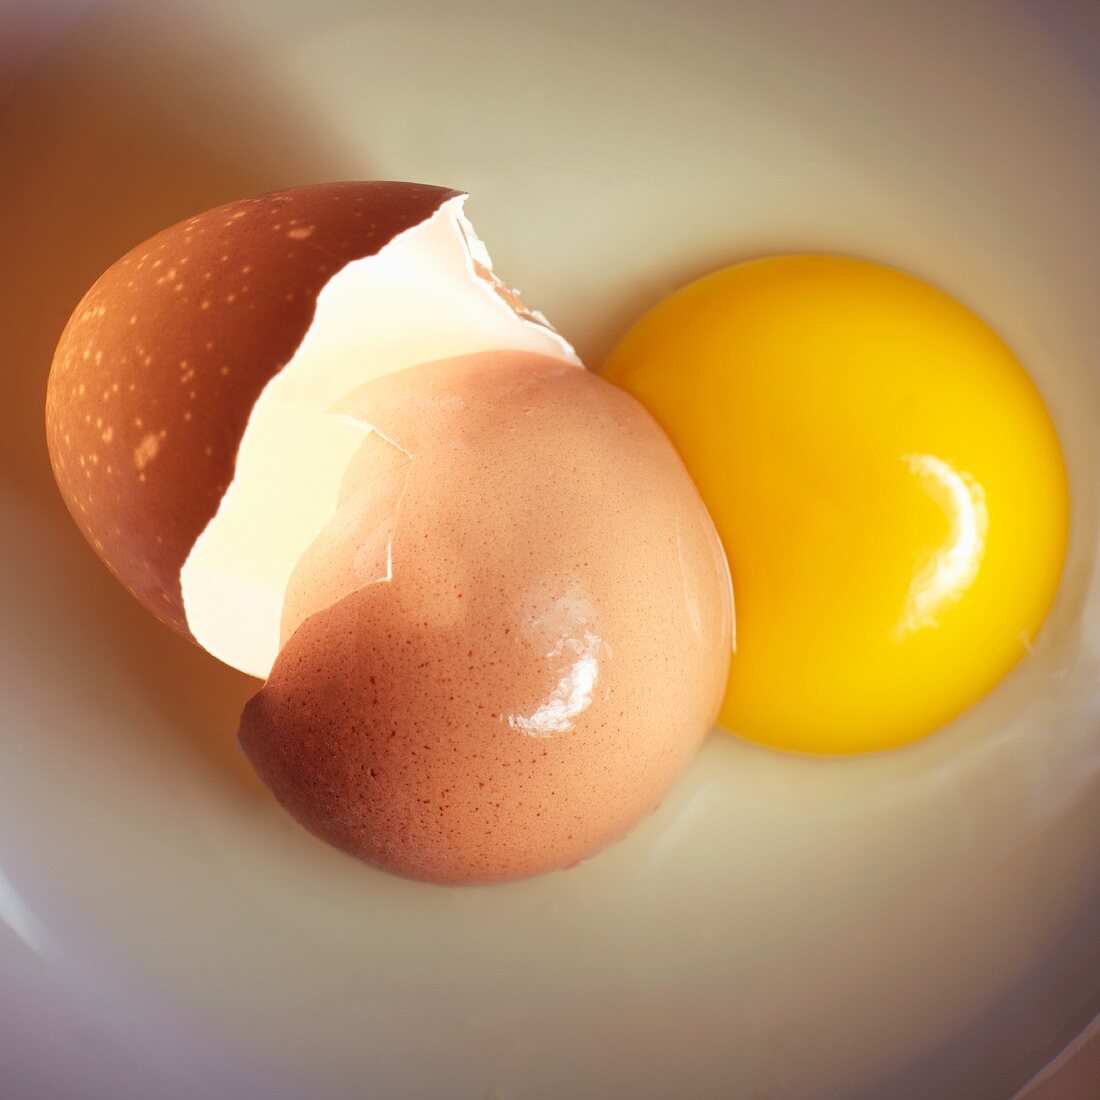 An egg, broken with shell